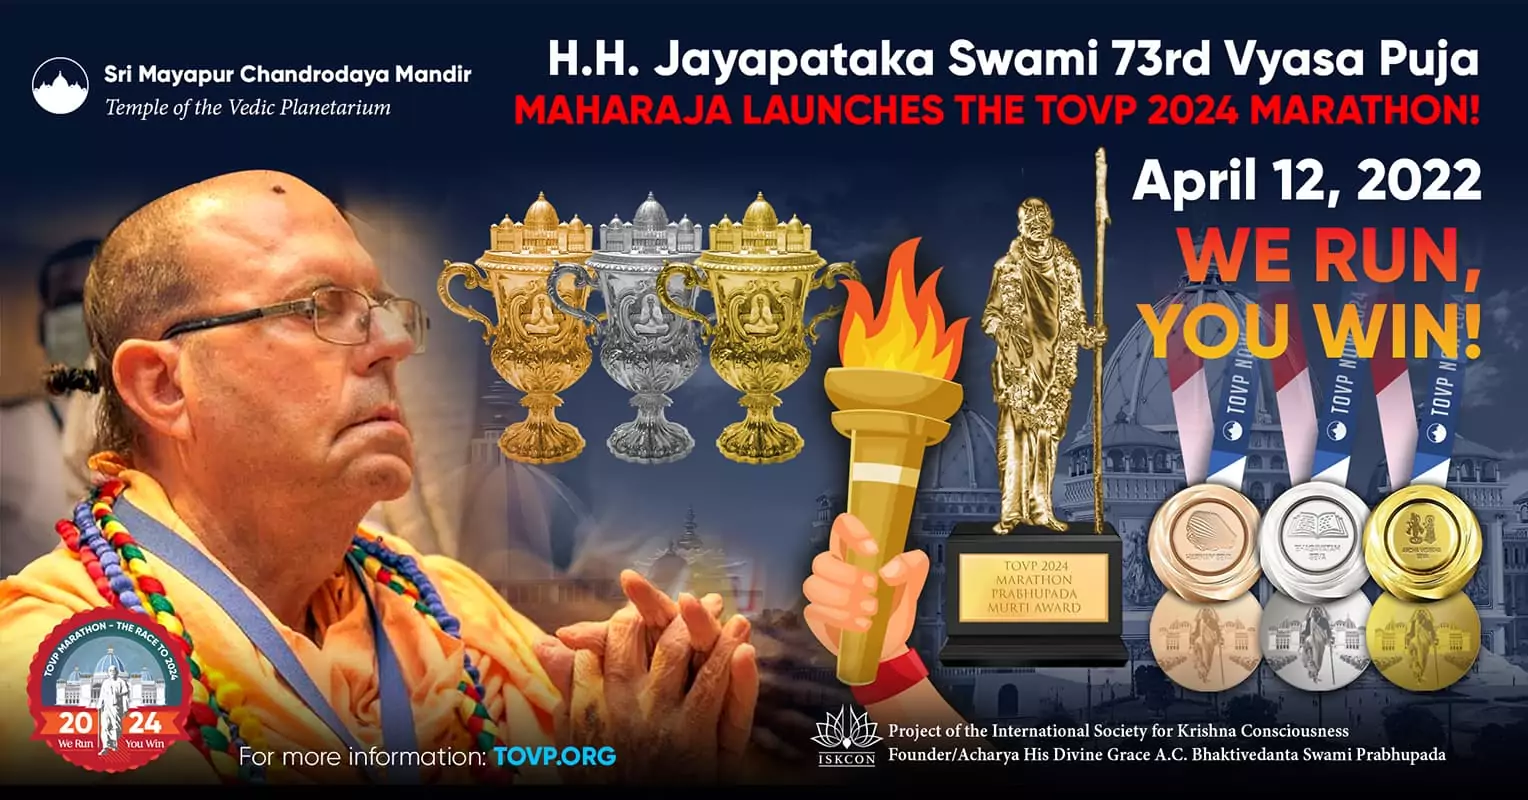 HH Jayapataka Swami 在他的第 73 届 Vyasa Puja 庆典上宣布 TOVP 2024 马拉松正式启动